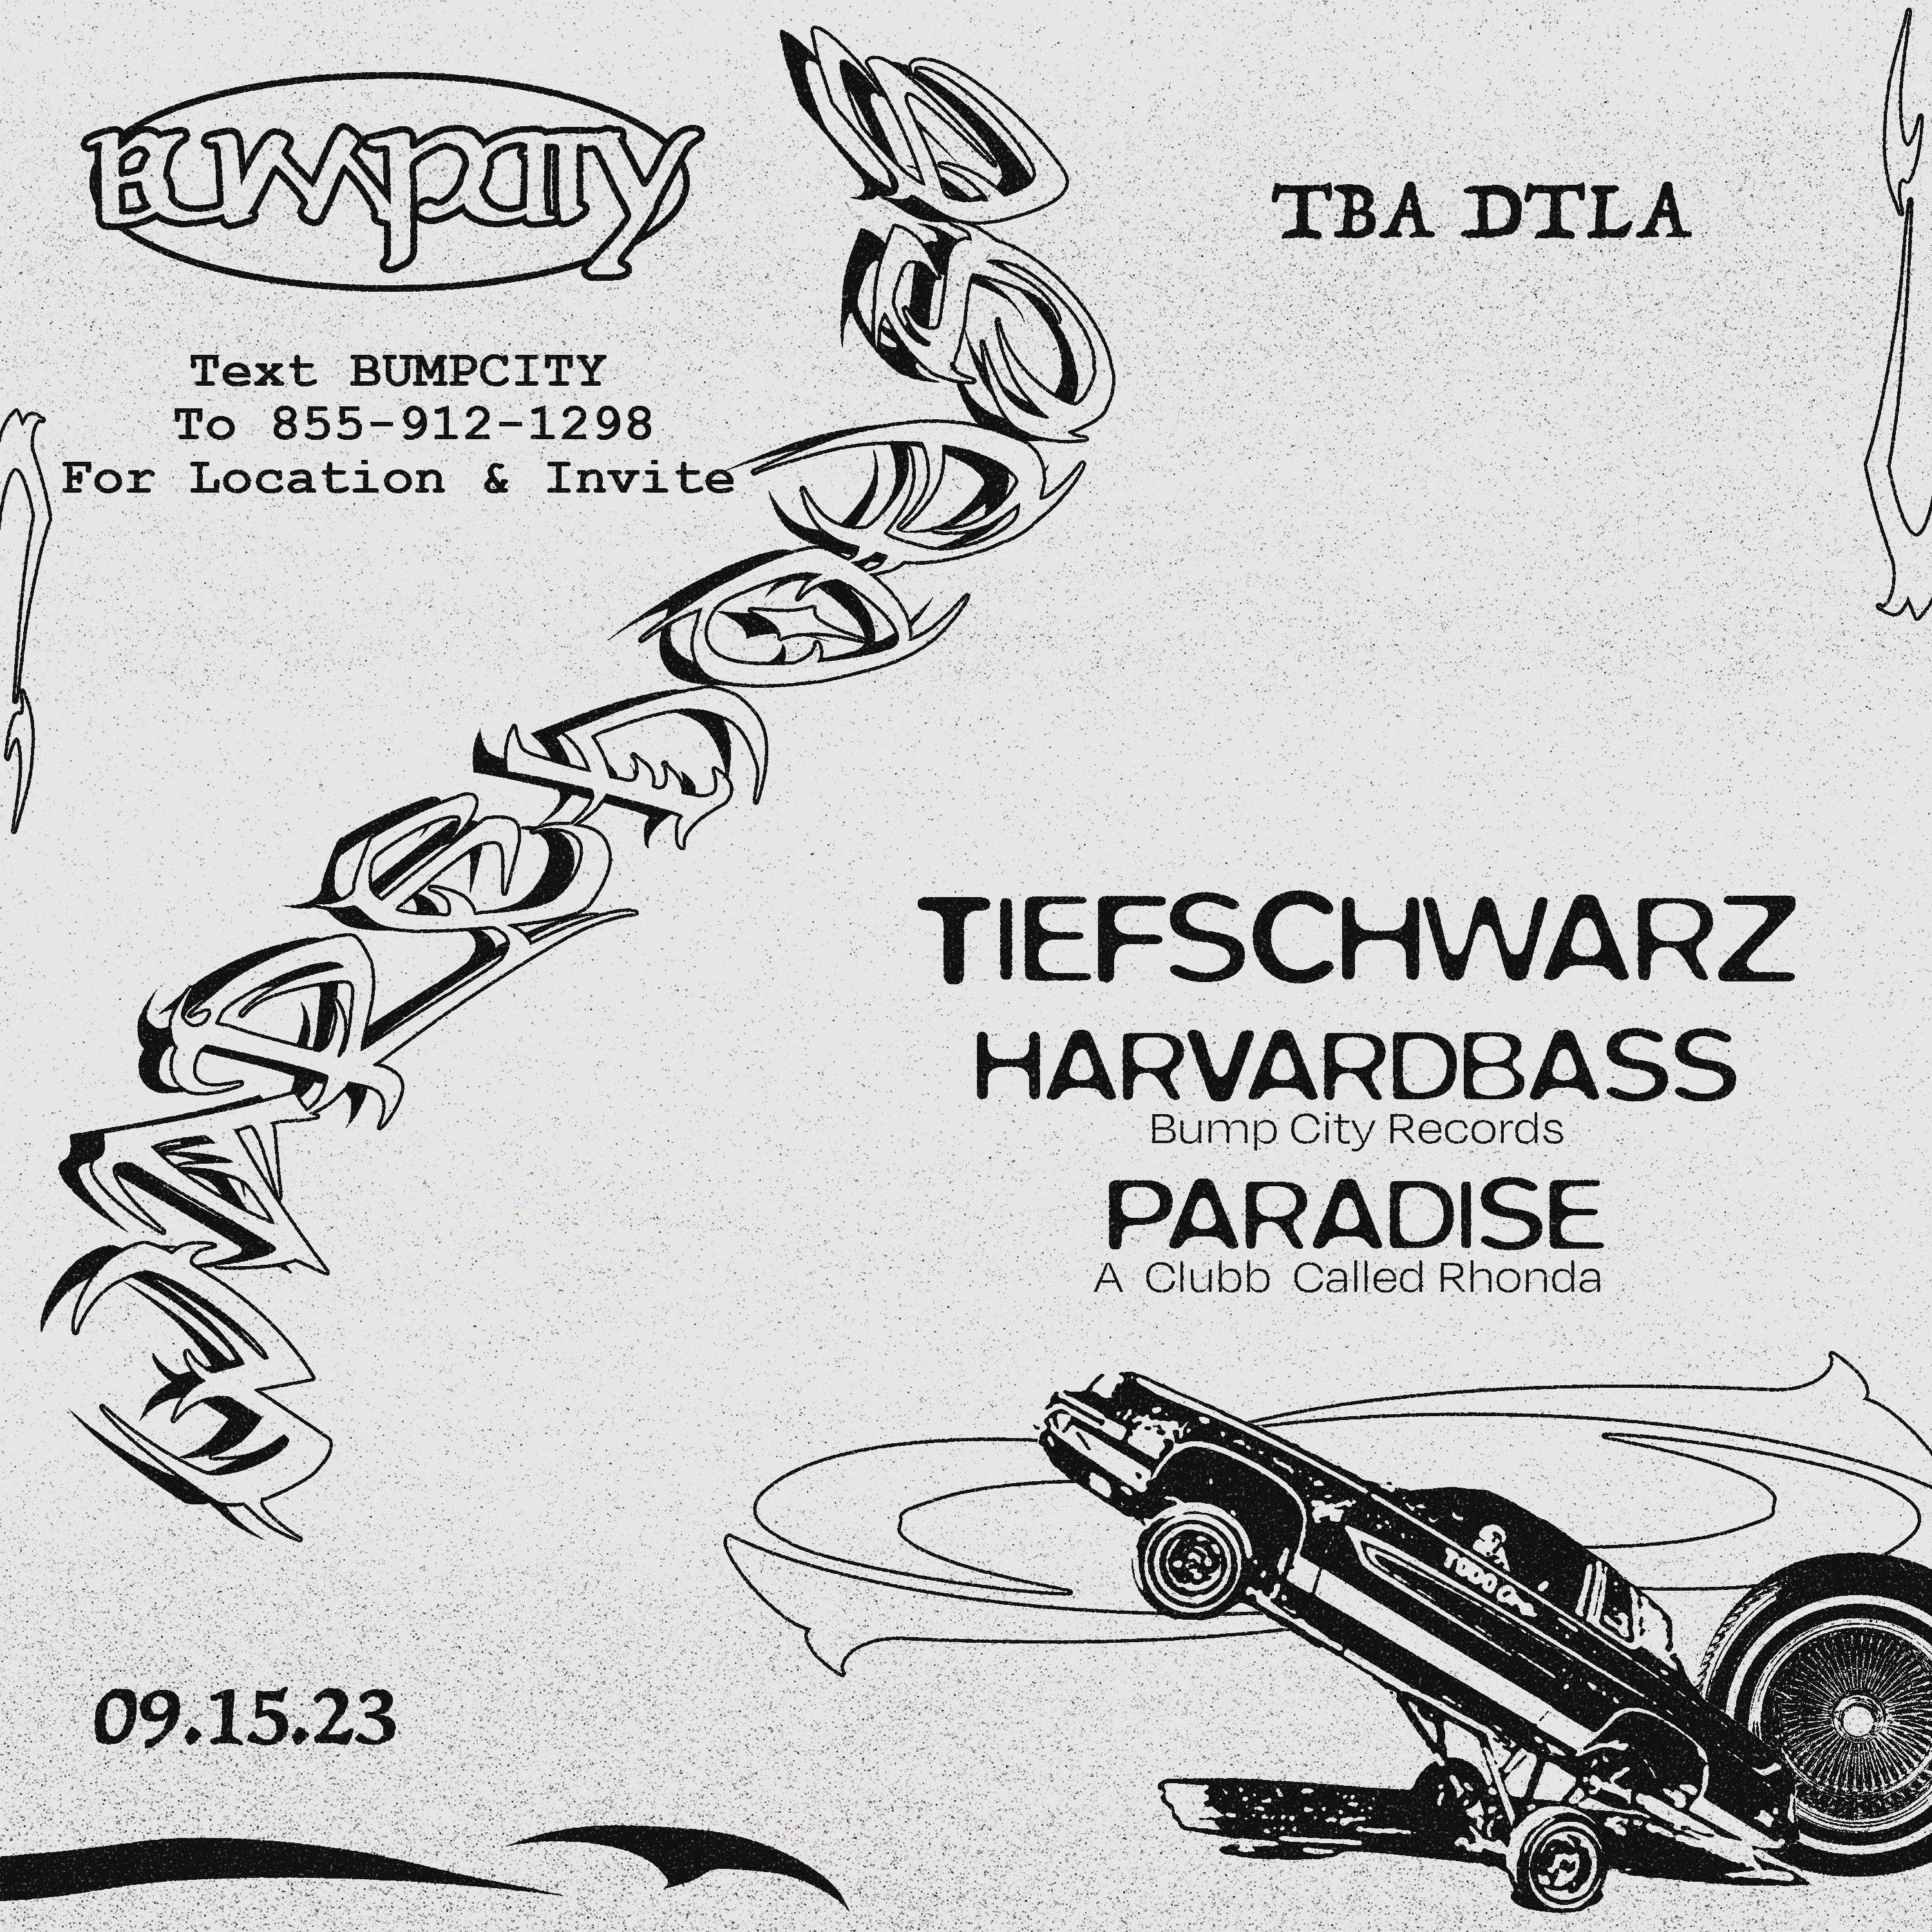 Bump City Warehouse: Tiefschwarz, Harvard Bass, and Paradise - フライヤー表